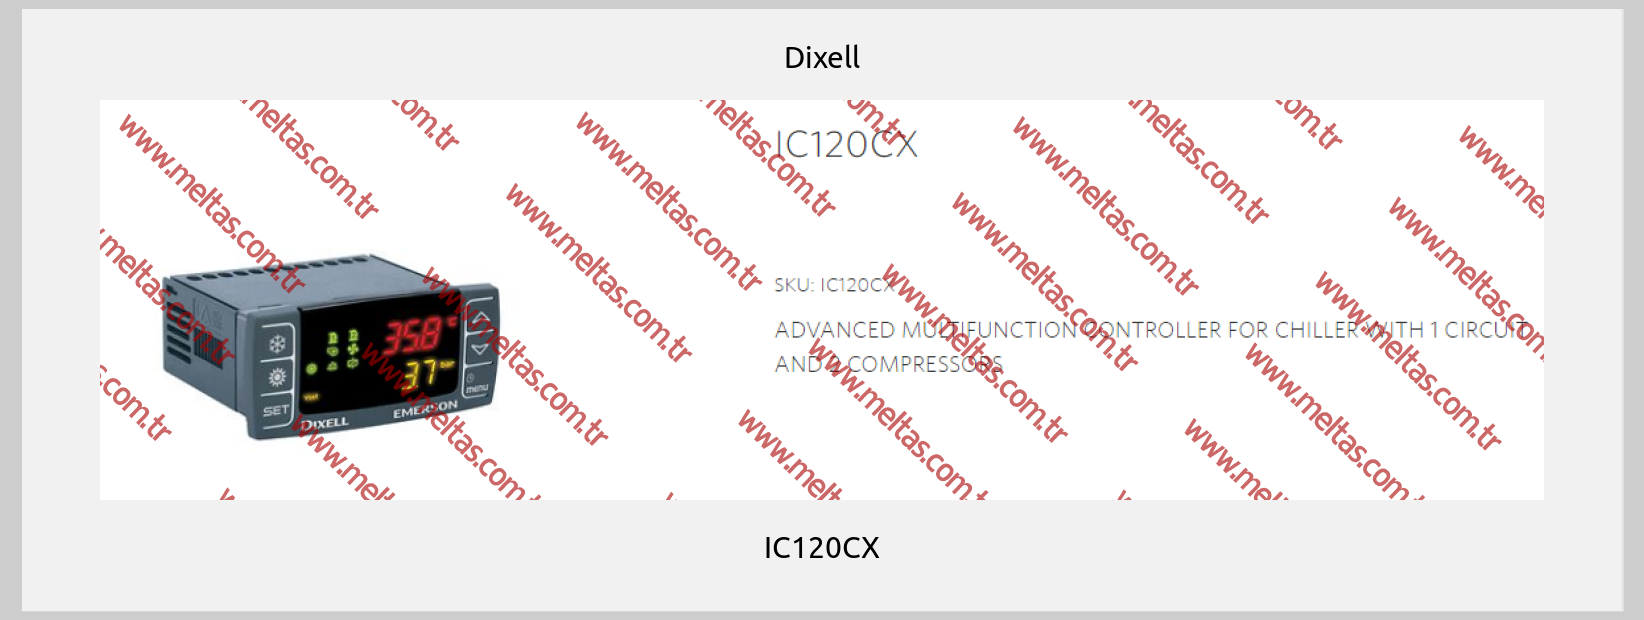 Dixell-IC120CX